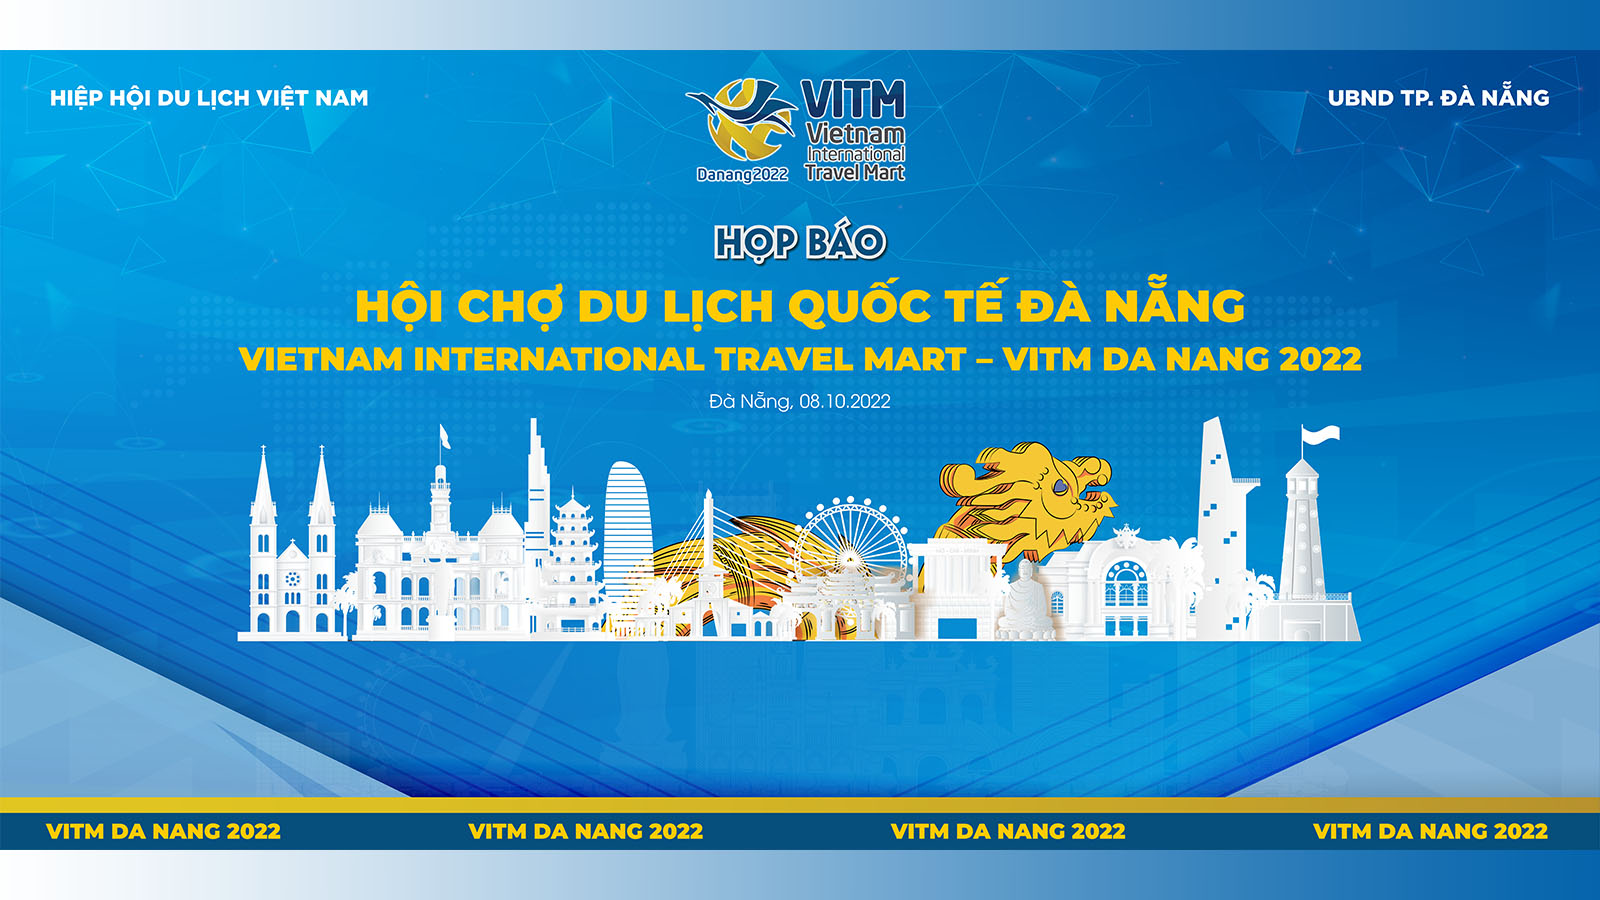 Thong Cao Bao Chito Chuc Hoi Cho Du Lich Quoc Te Vitm Da Nang 2022 Tu Ngay 09 12 Den Ngay 11 12 2022